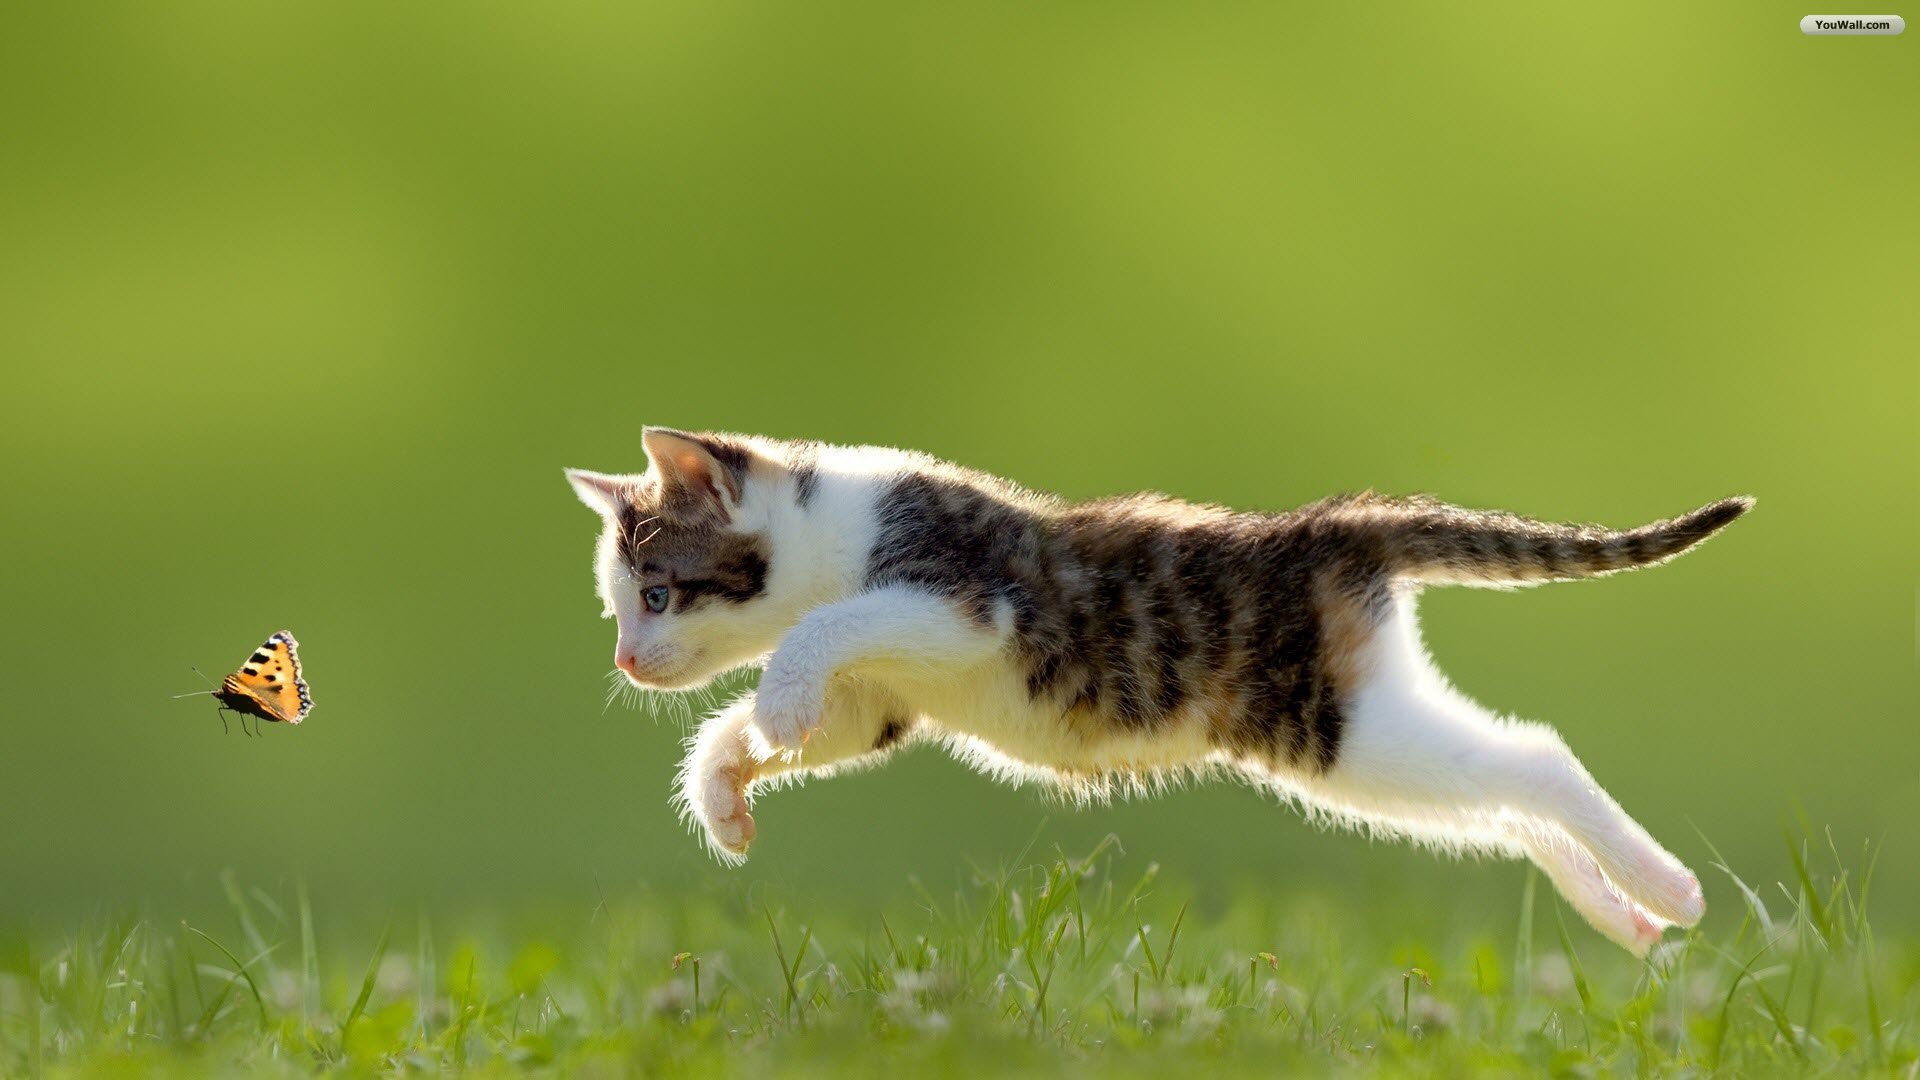 PsBattle: Cat jumping at butterfly : photoshopbattles